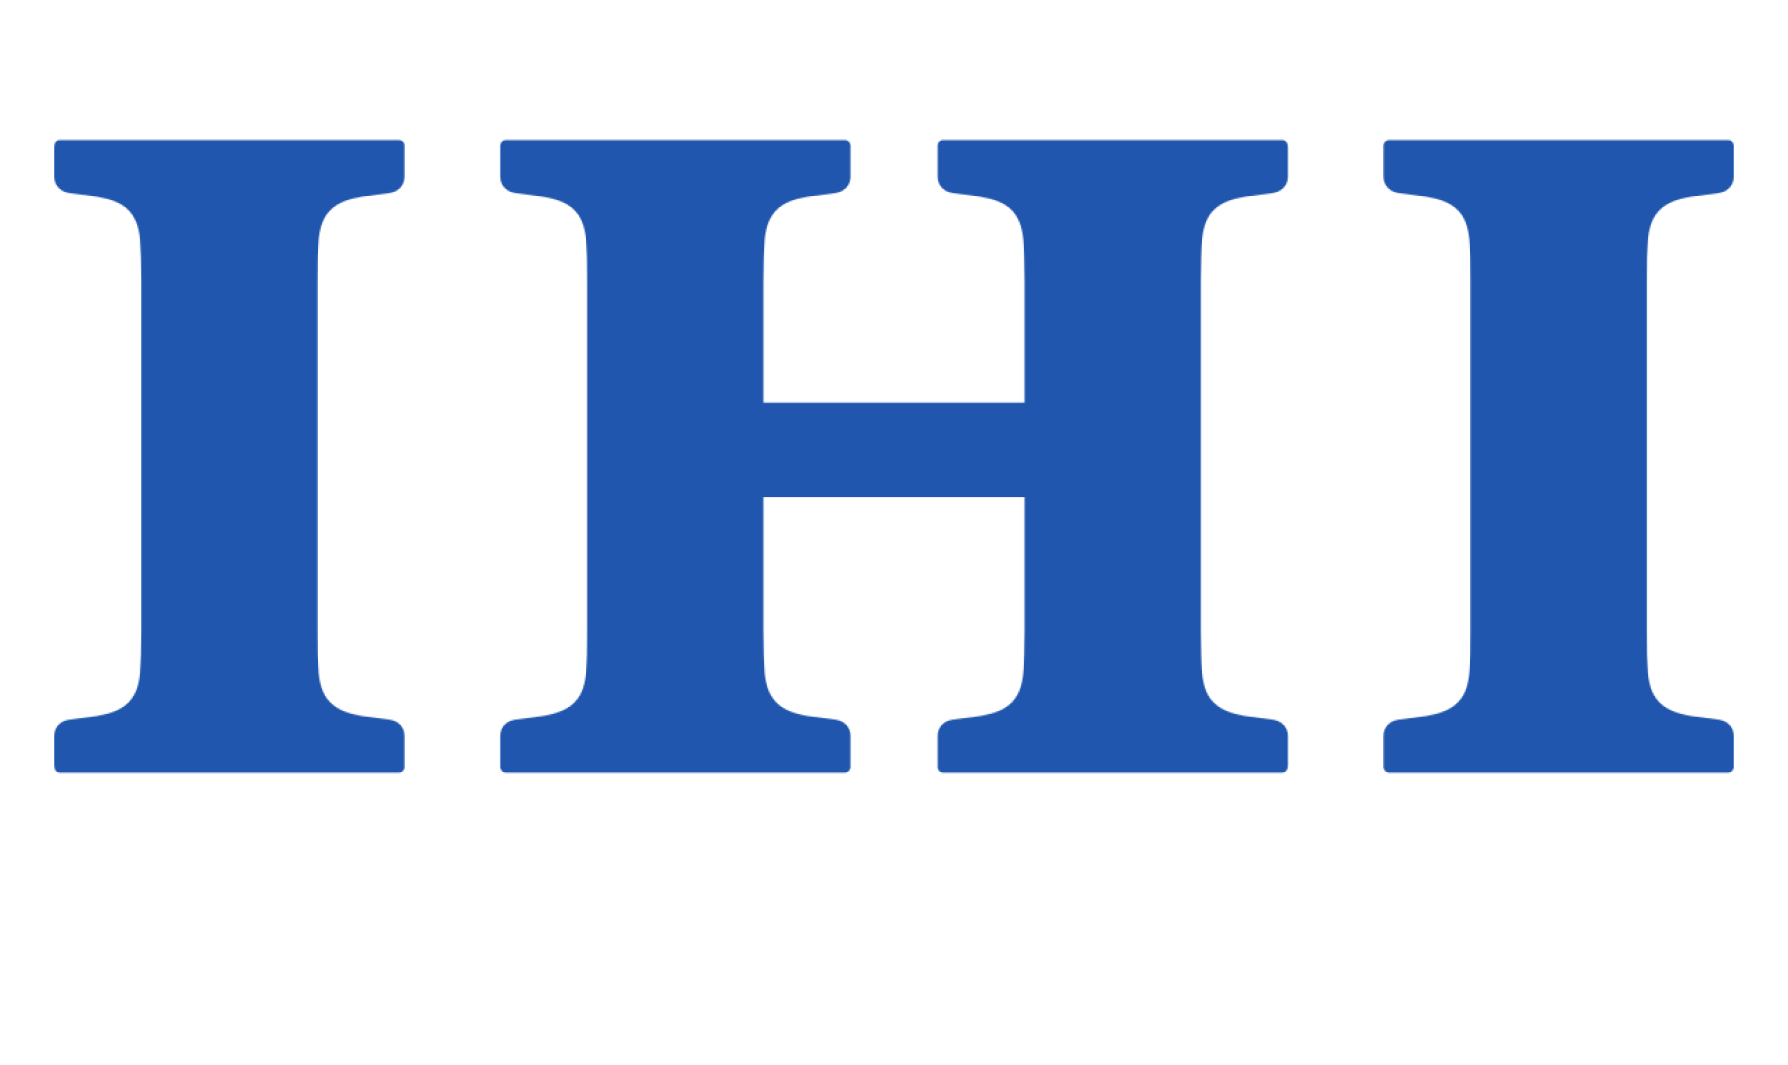 IHI logo